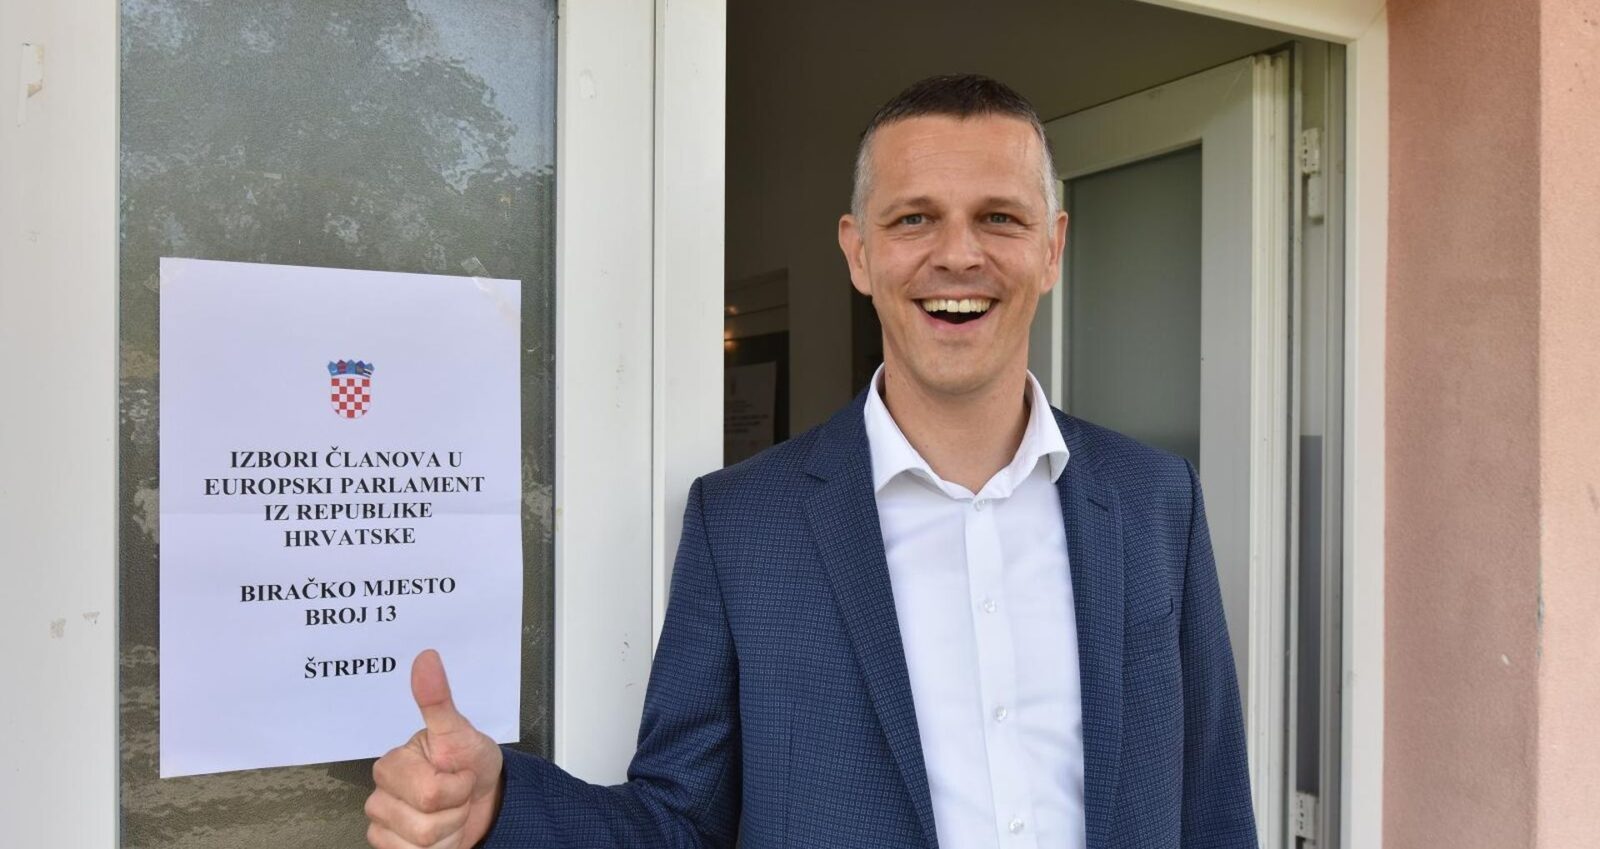 26.05.2019., Buzet - Celnik IDS-a i nositelj liste Amsterdamske koalicije Valter Flego glasovao je na izbori clanova za Europski parlament. Photo: Dusko Marusic/PIXSELL